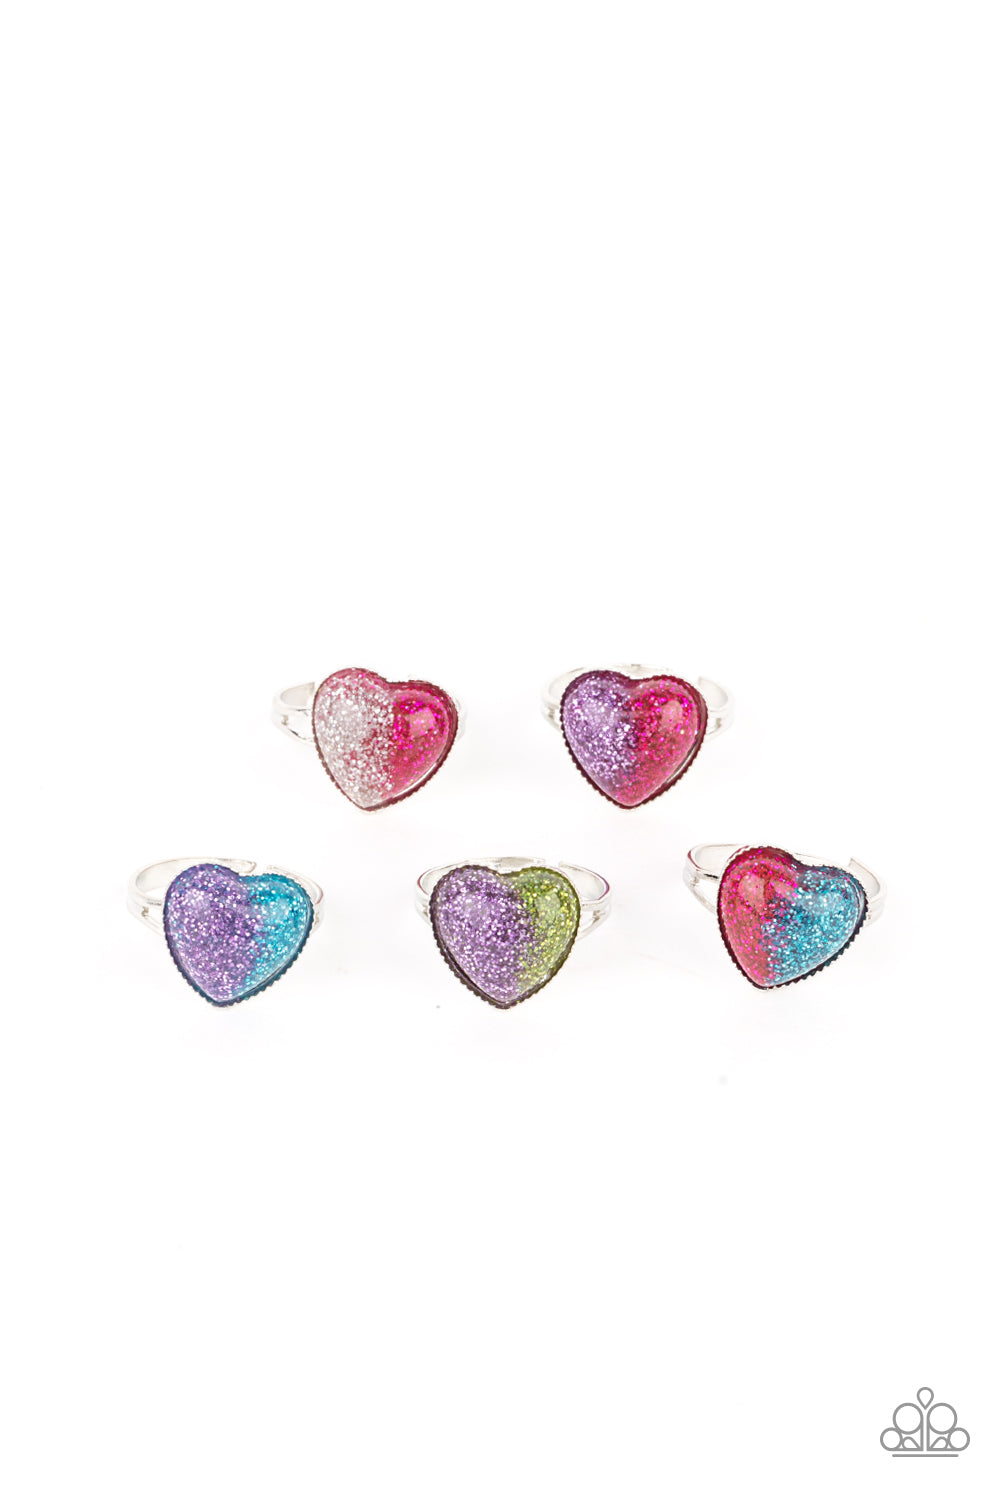 Little Diva Rings - Glittery Hearts